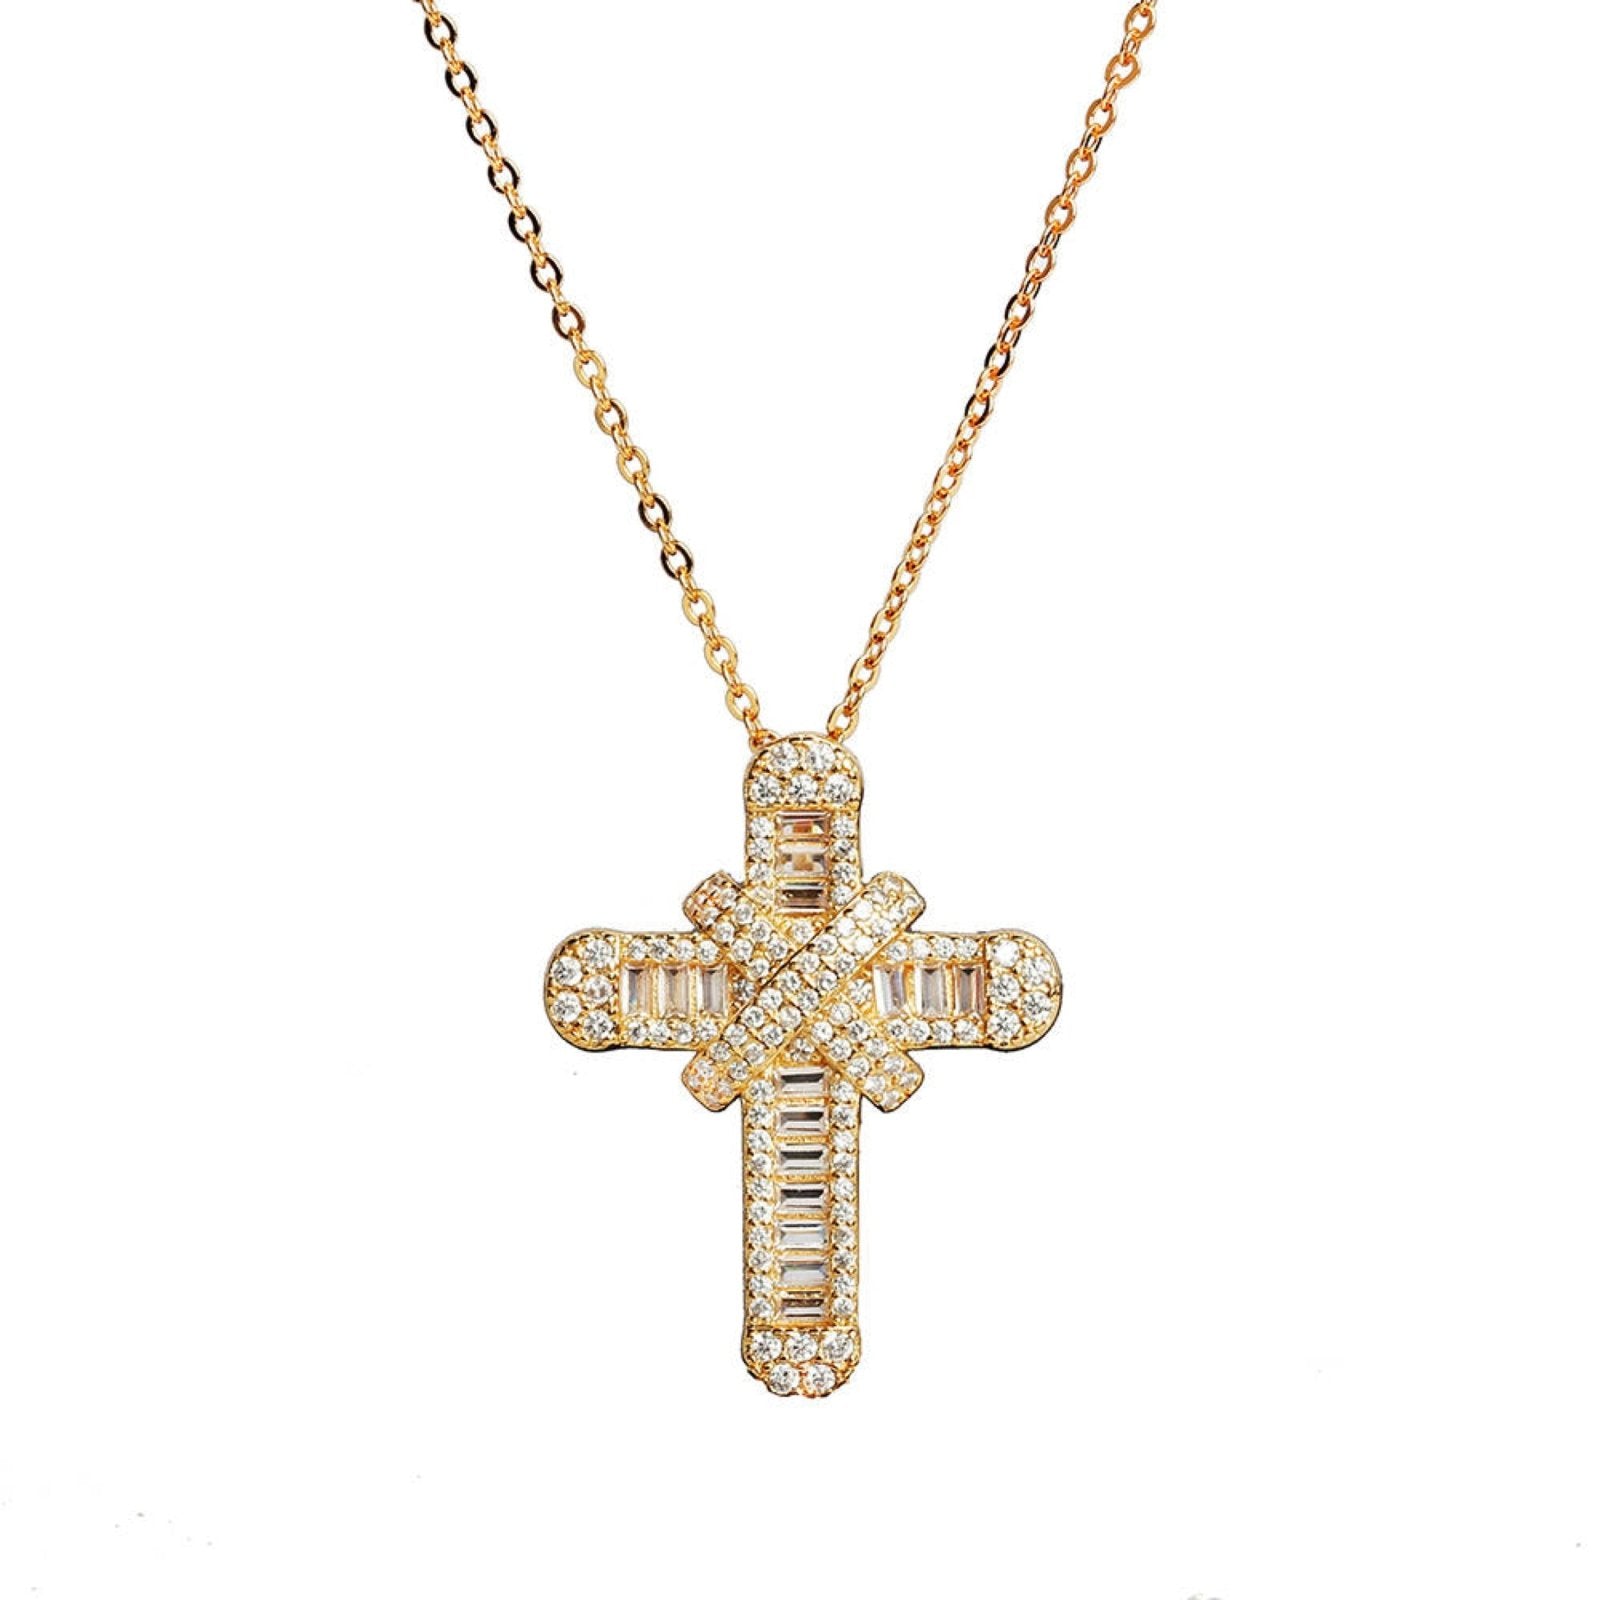 Gold Adjustable Chain Cross Pendant Necklace - Luxe Emporium x